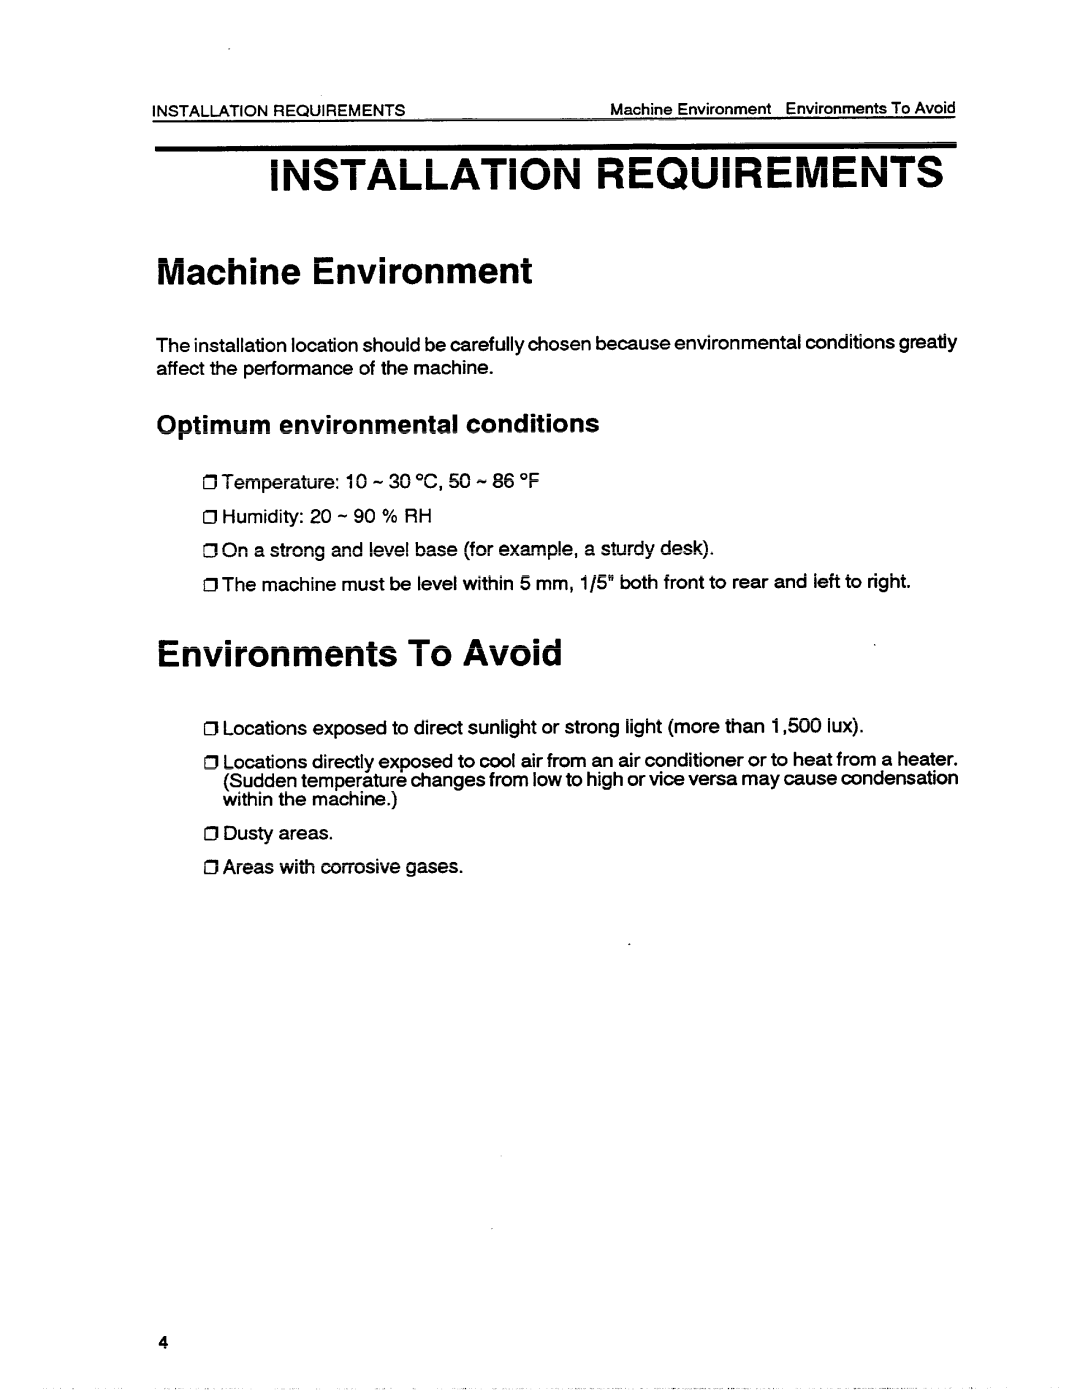 Ricoh VT1730 manual Installation Requirements, Machine Environment, Environments To Avoid, Optimum environmental conditions 